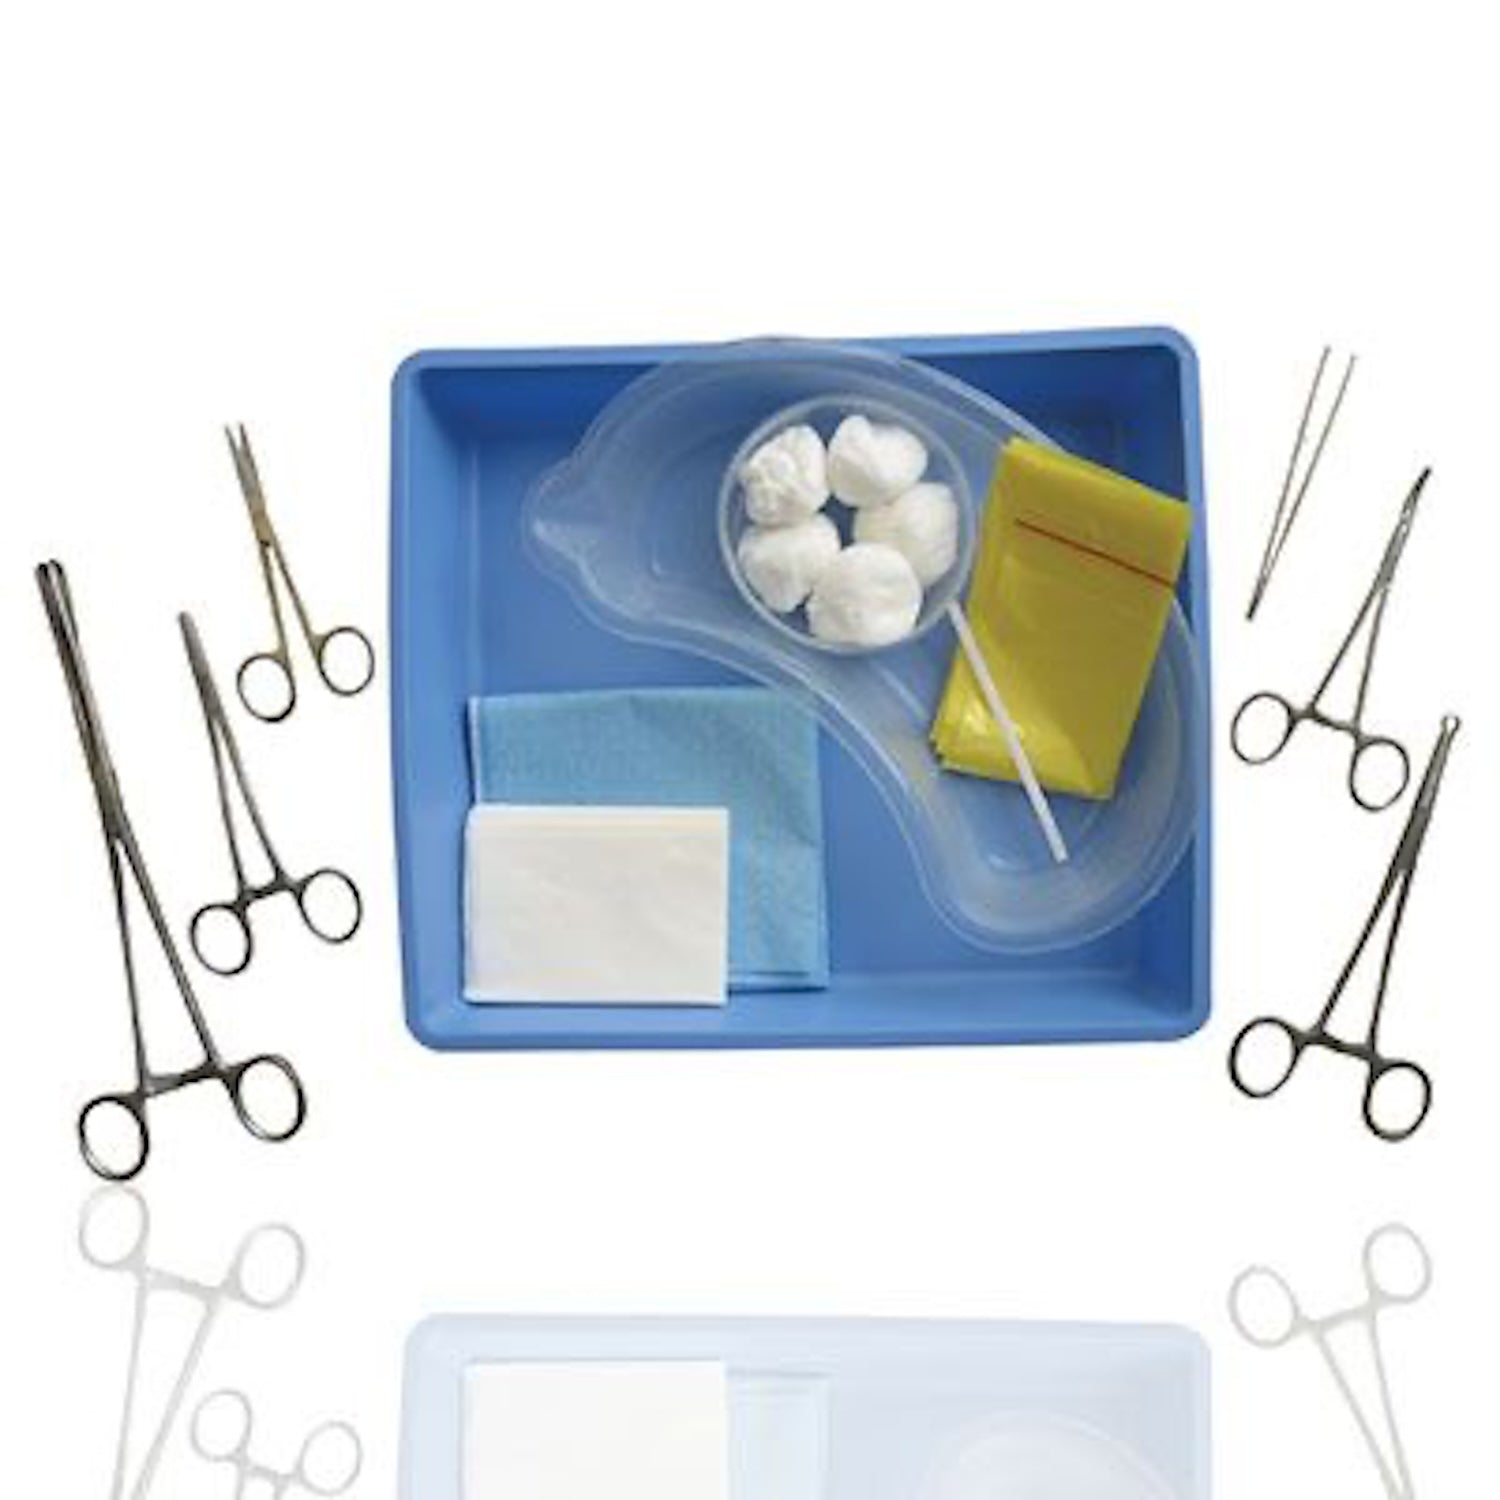 Instramed Vasectomy Pack No. 2